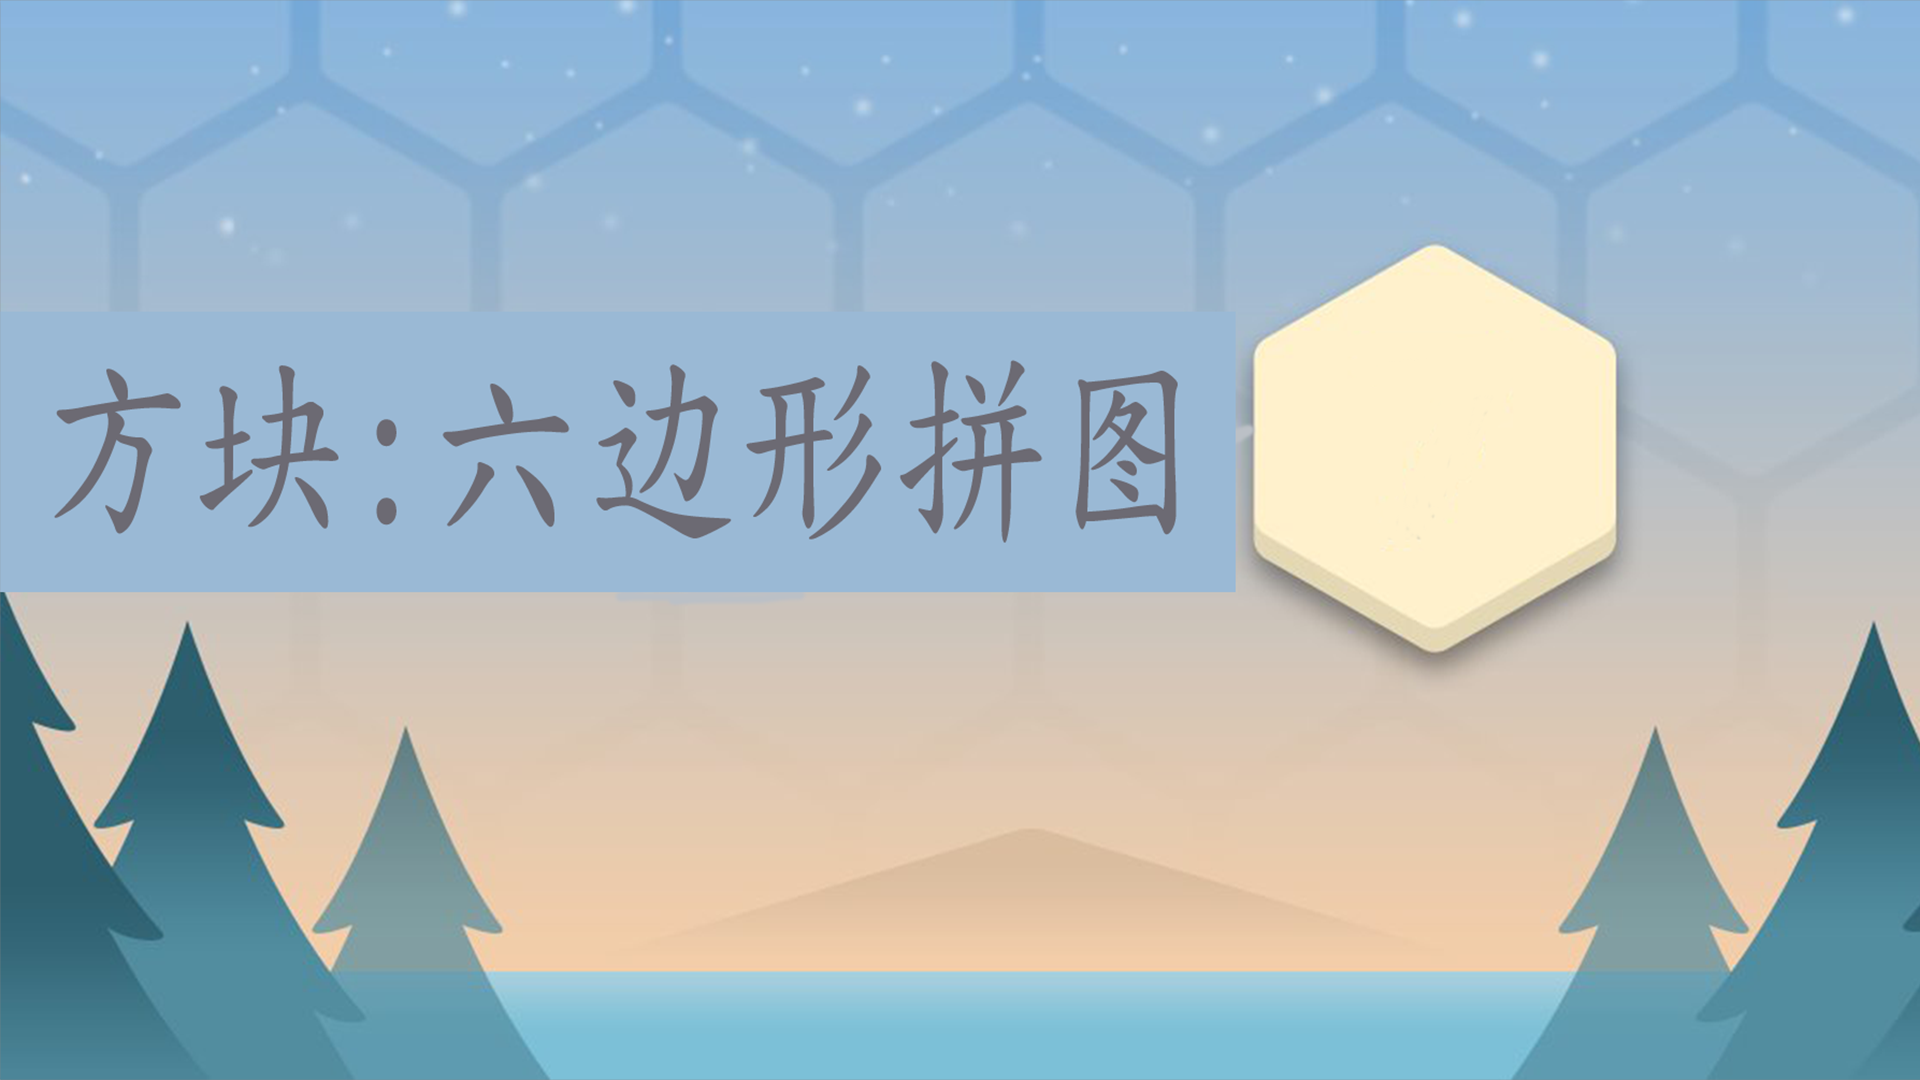 Banner of 方塊:六邊形拼圖 